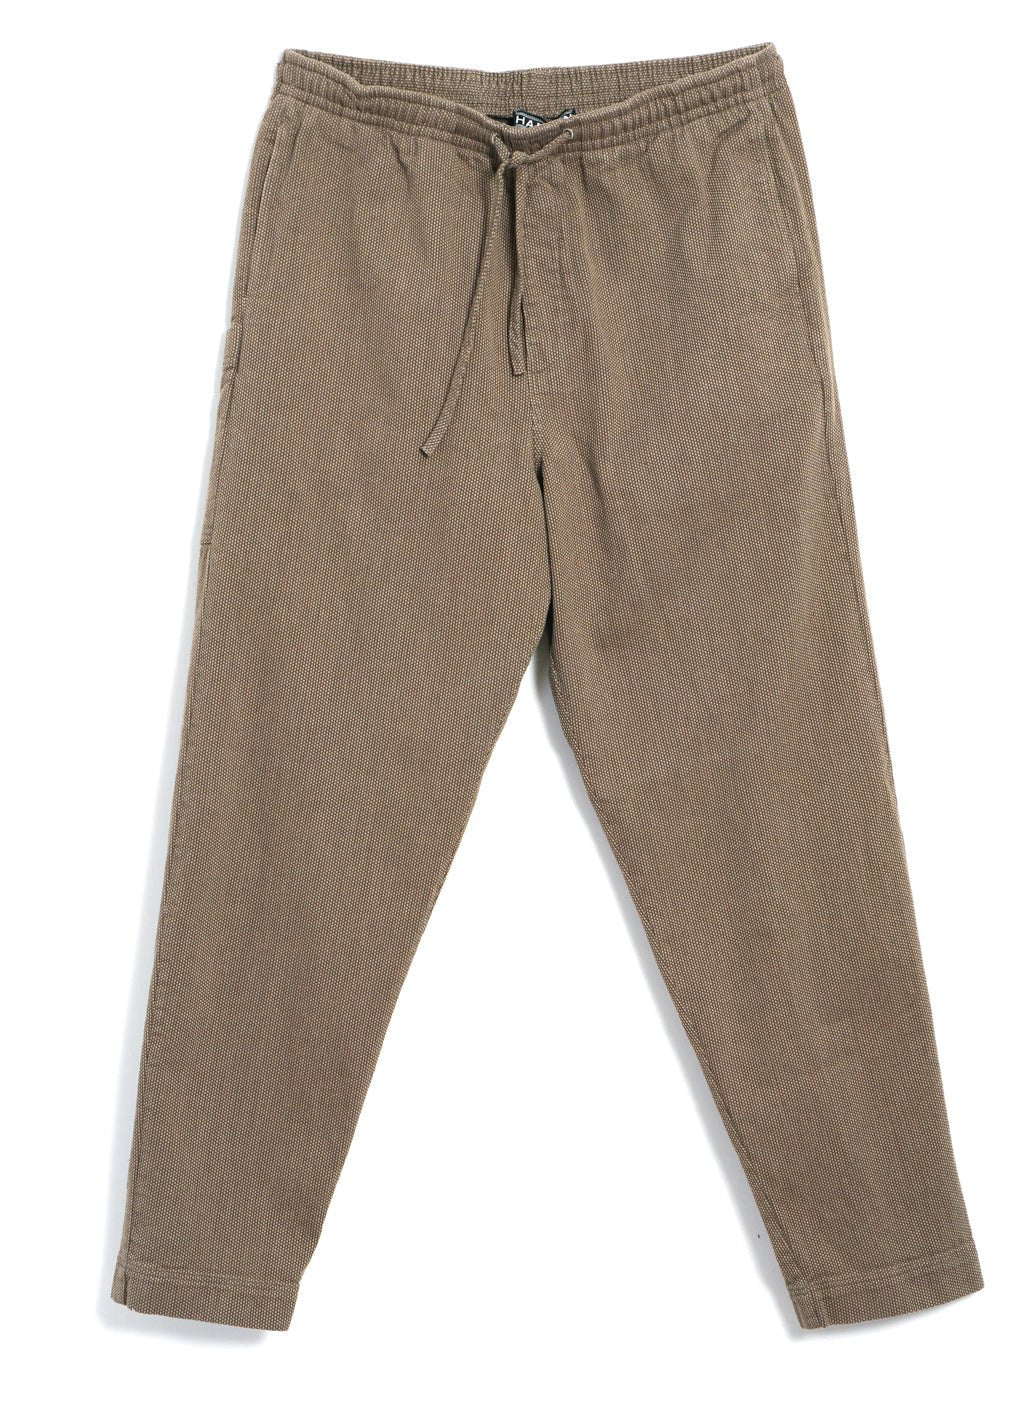 HANSEN GARMENTS - JACK | Casual Drawstring Pants | Khaki Sashiko - HANSEN Garments